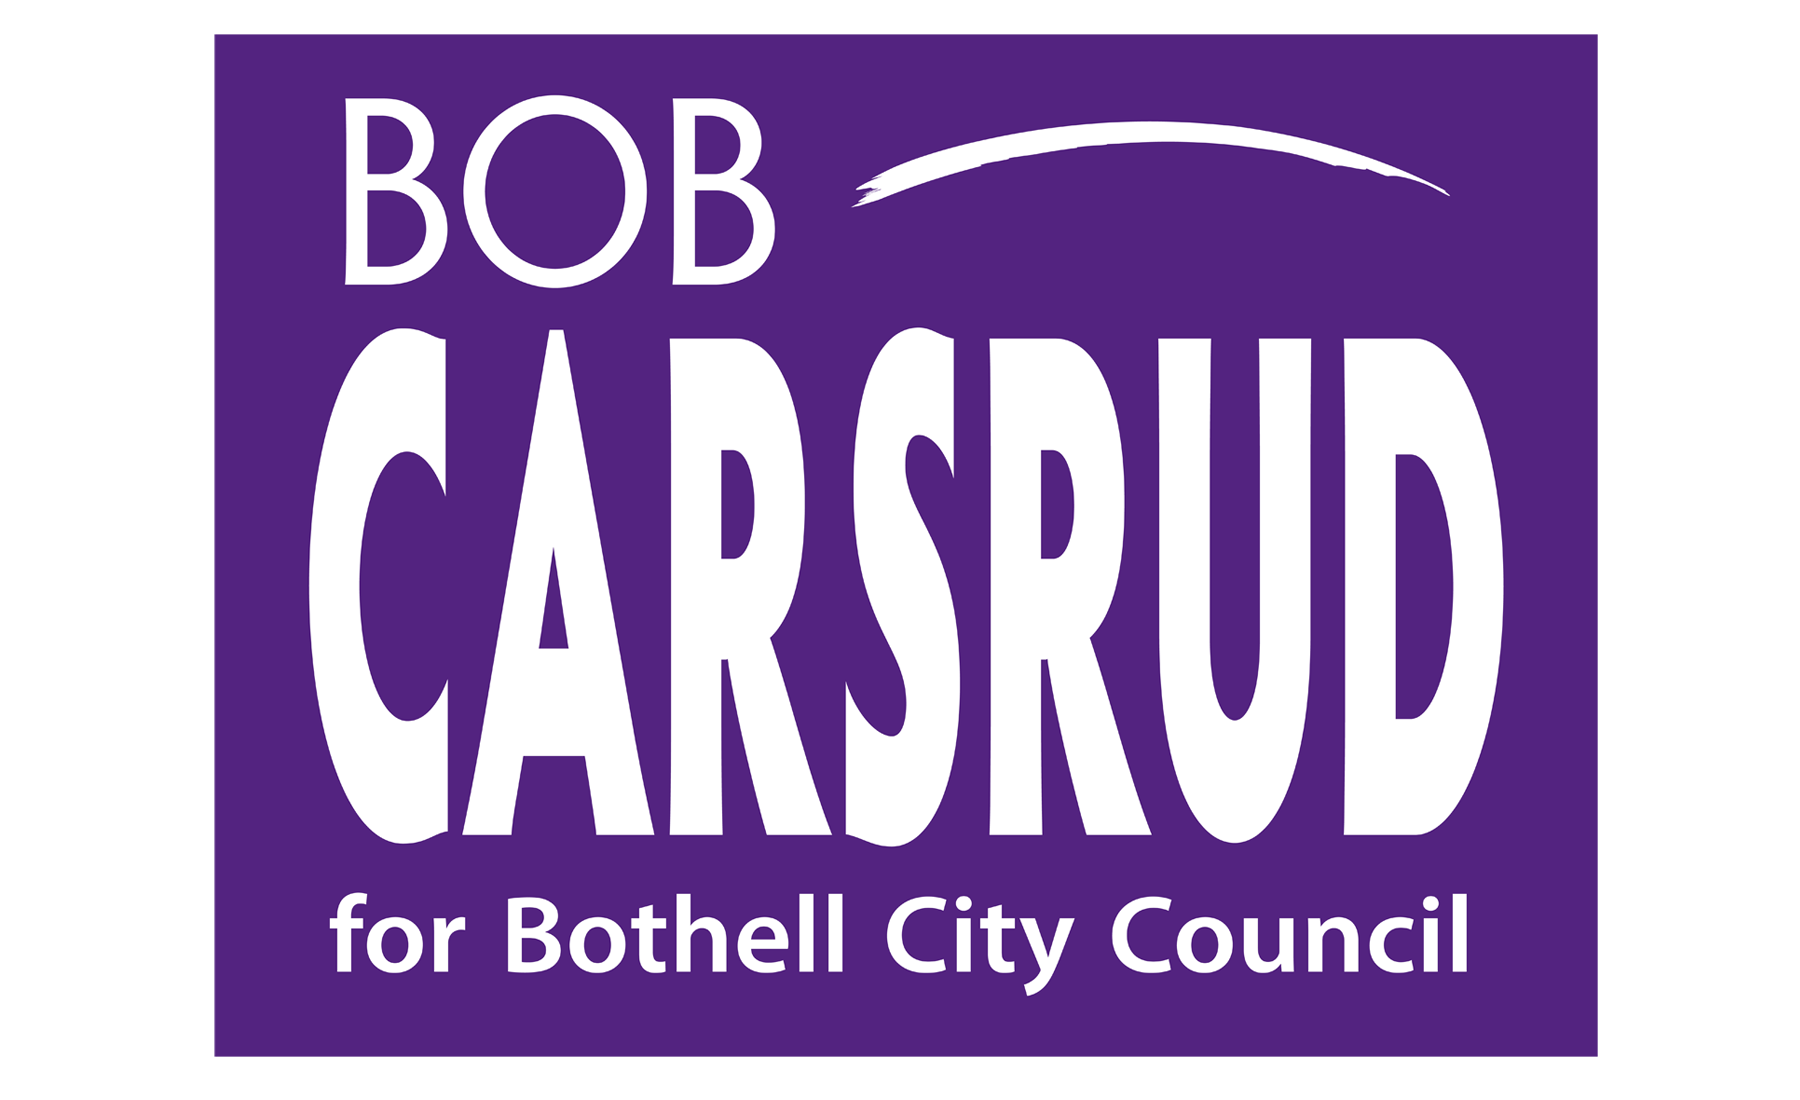 Bob_Carsrud